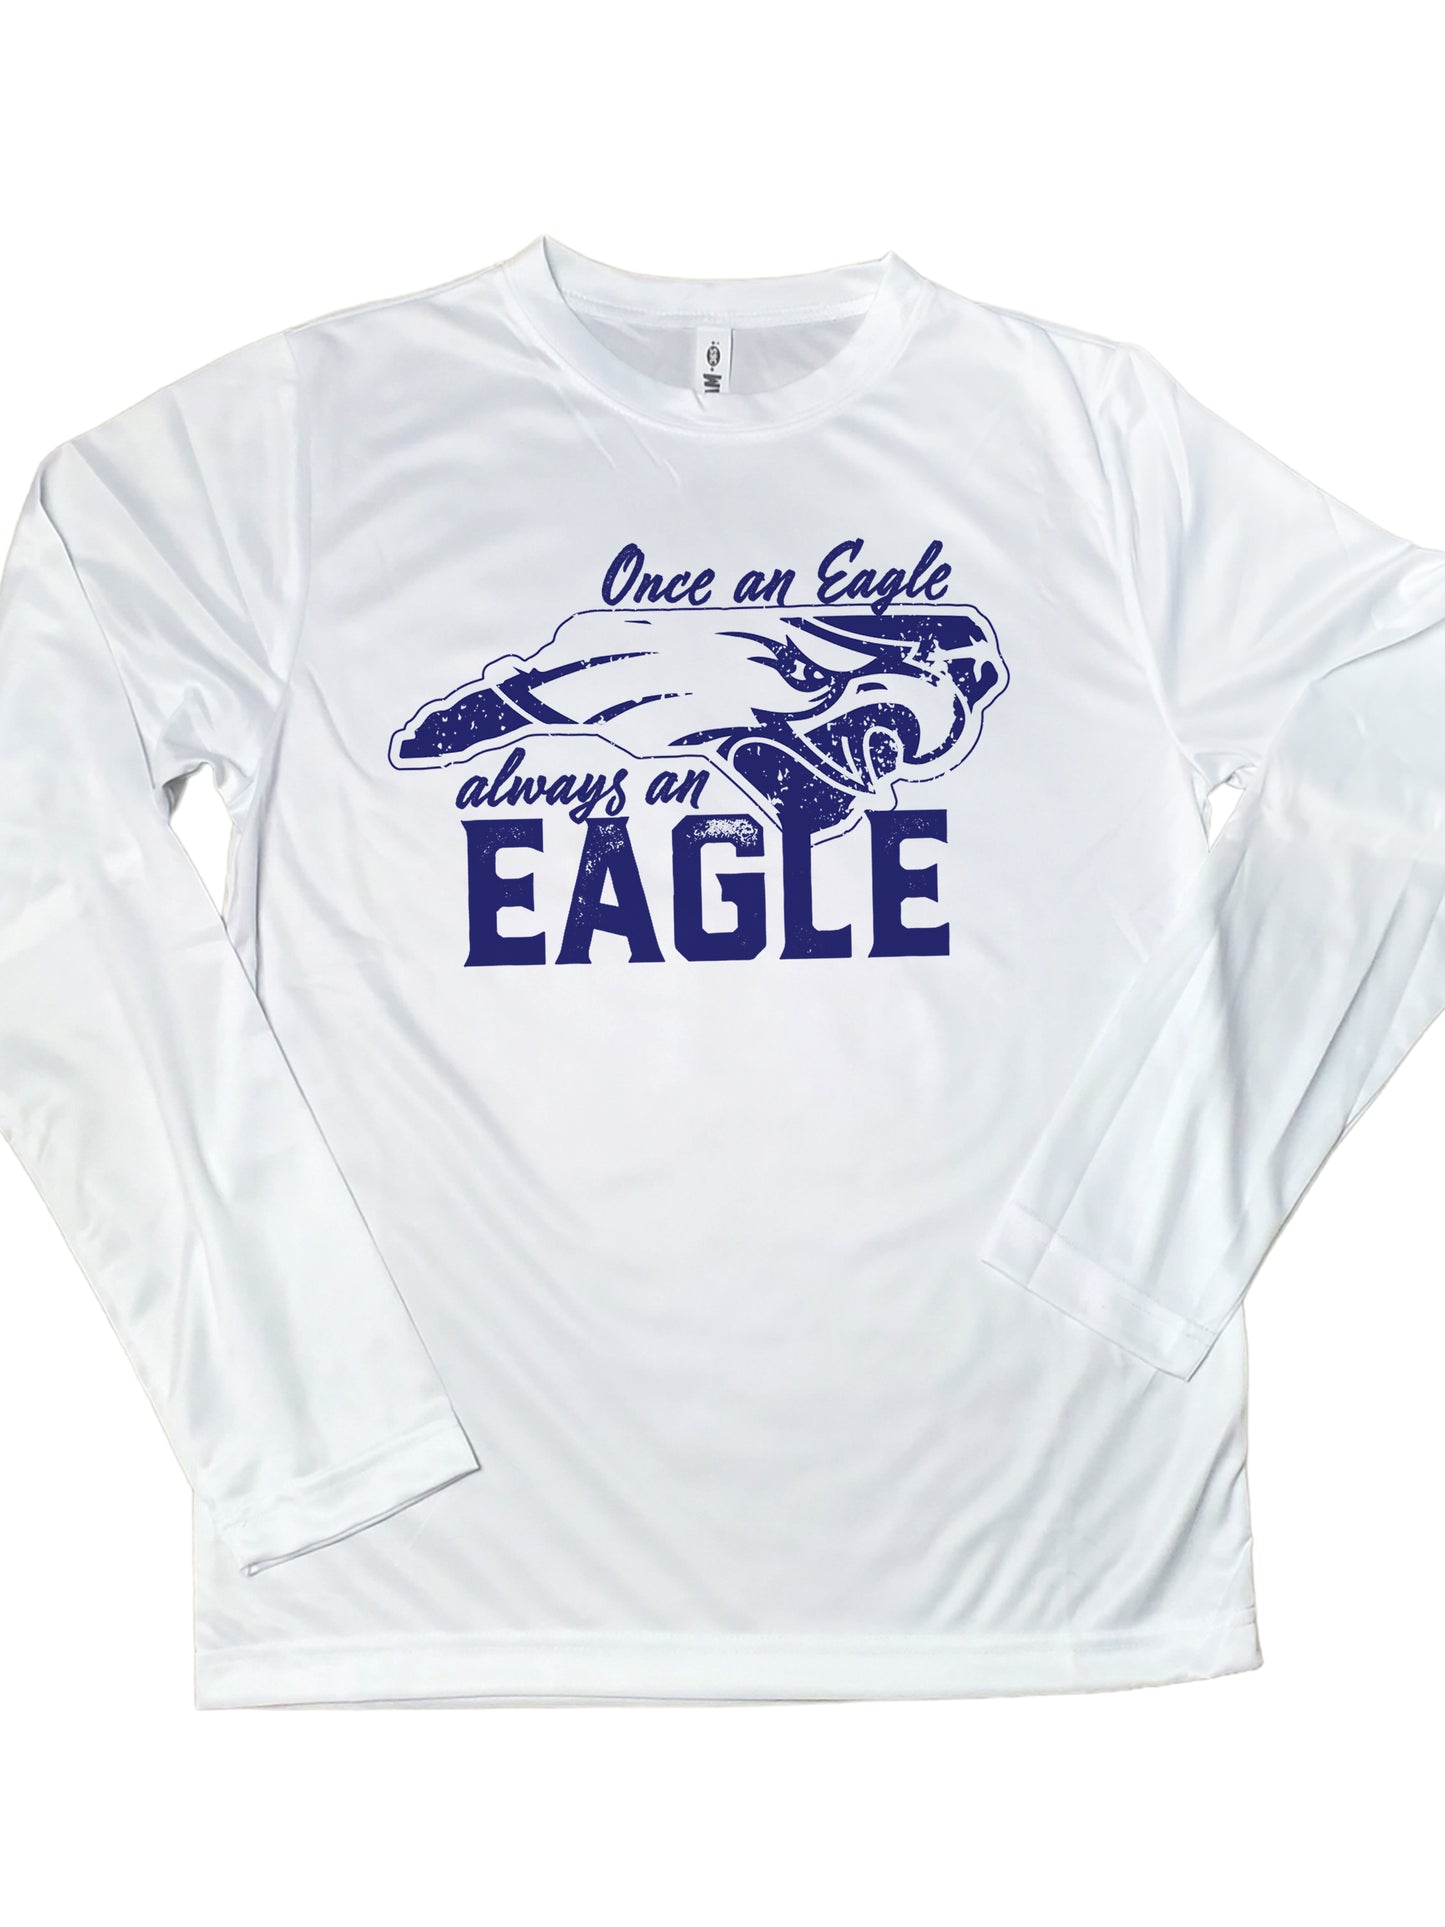 East Forsyth Football Alumni Shirt, Always an Eagle, EFHS Spirit Wear